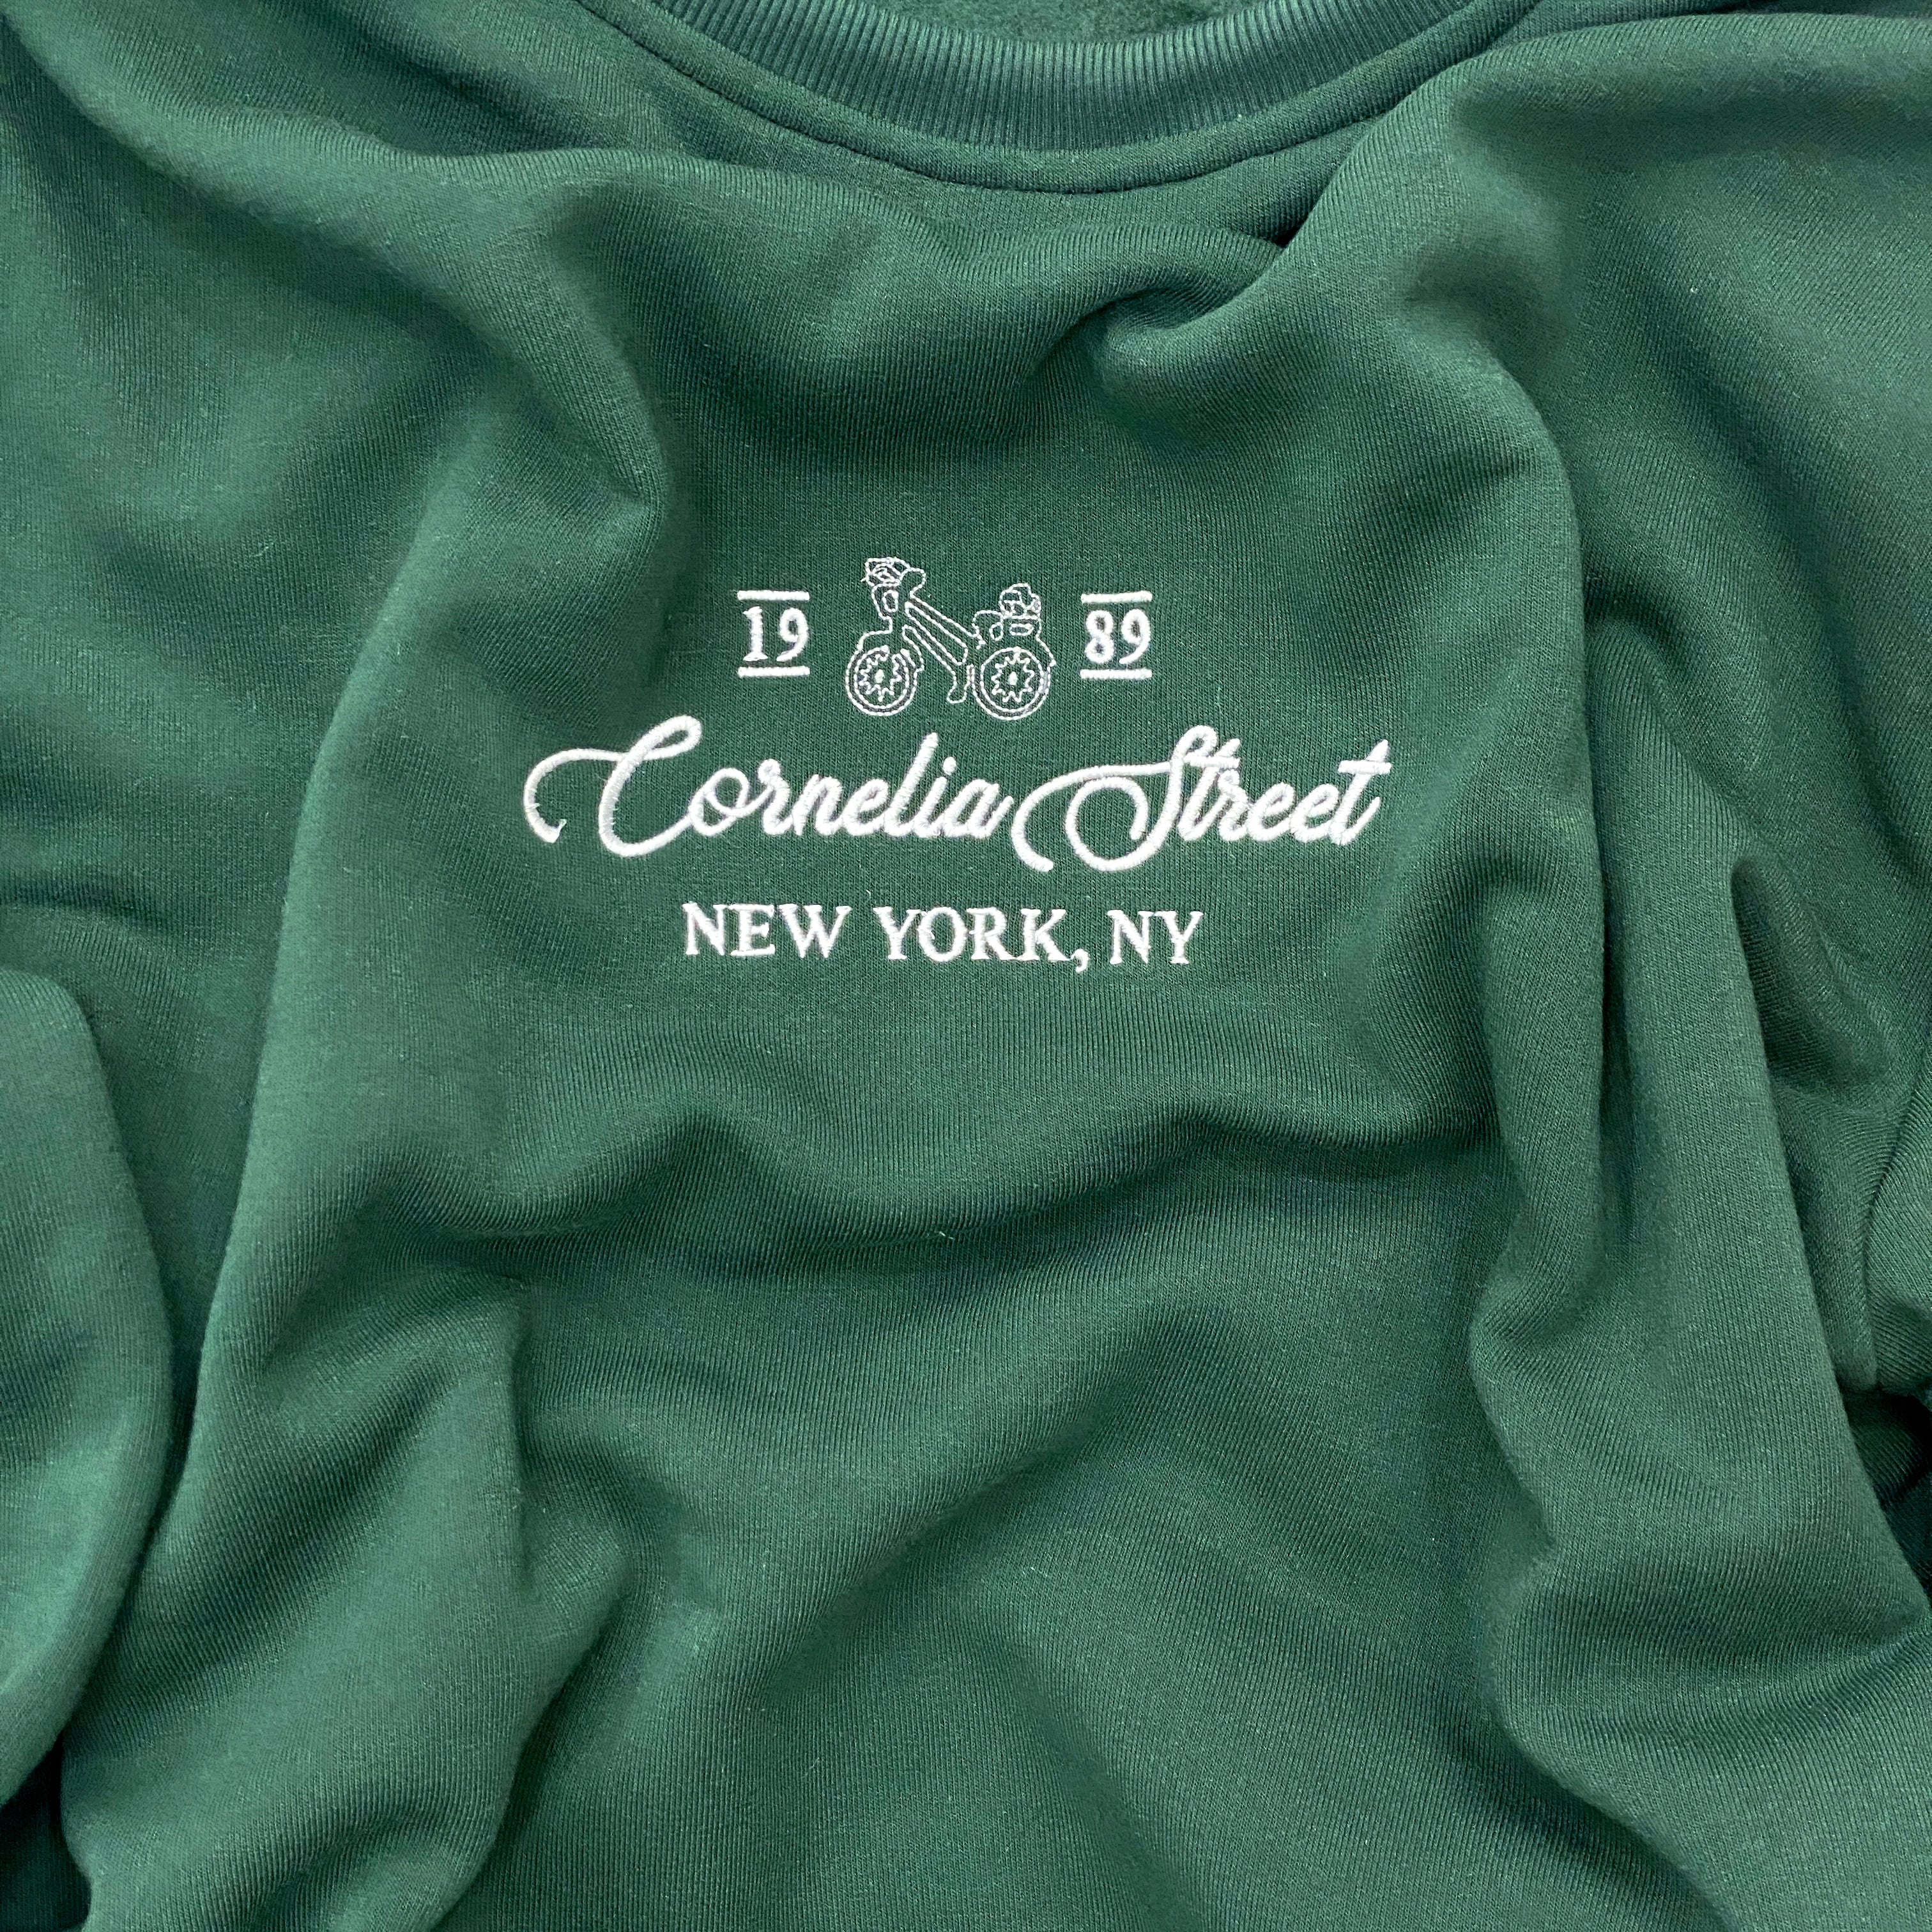 Cornelia Street New York Sweatshirt curated on LTK